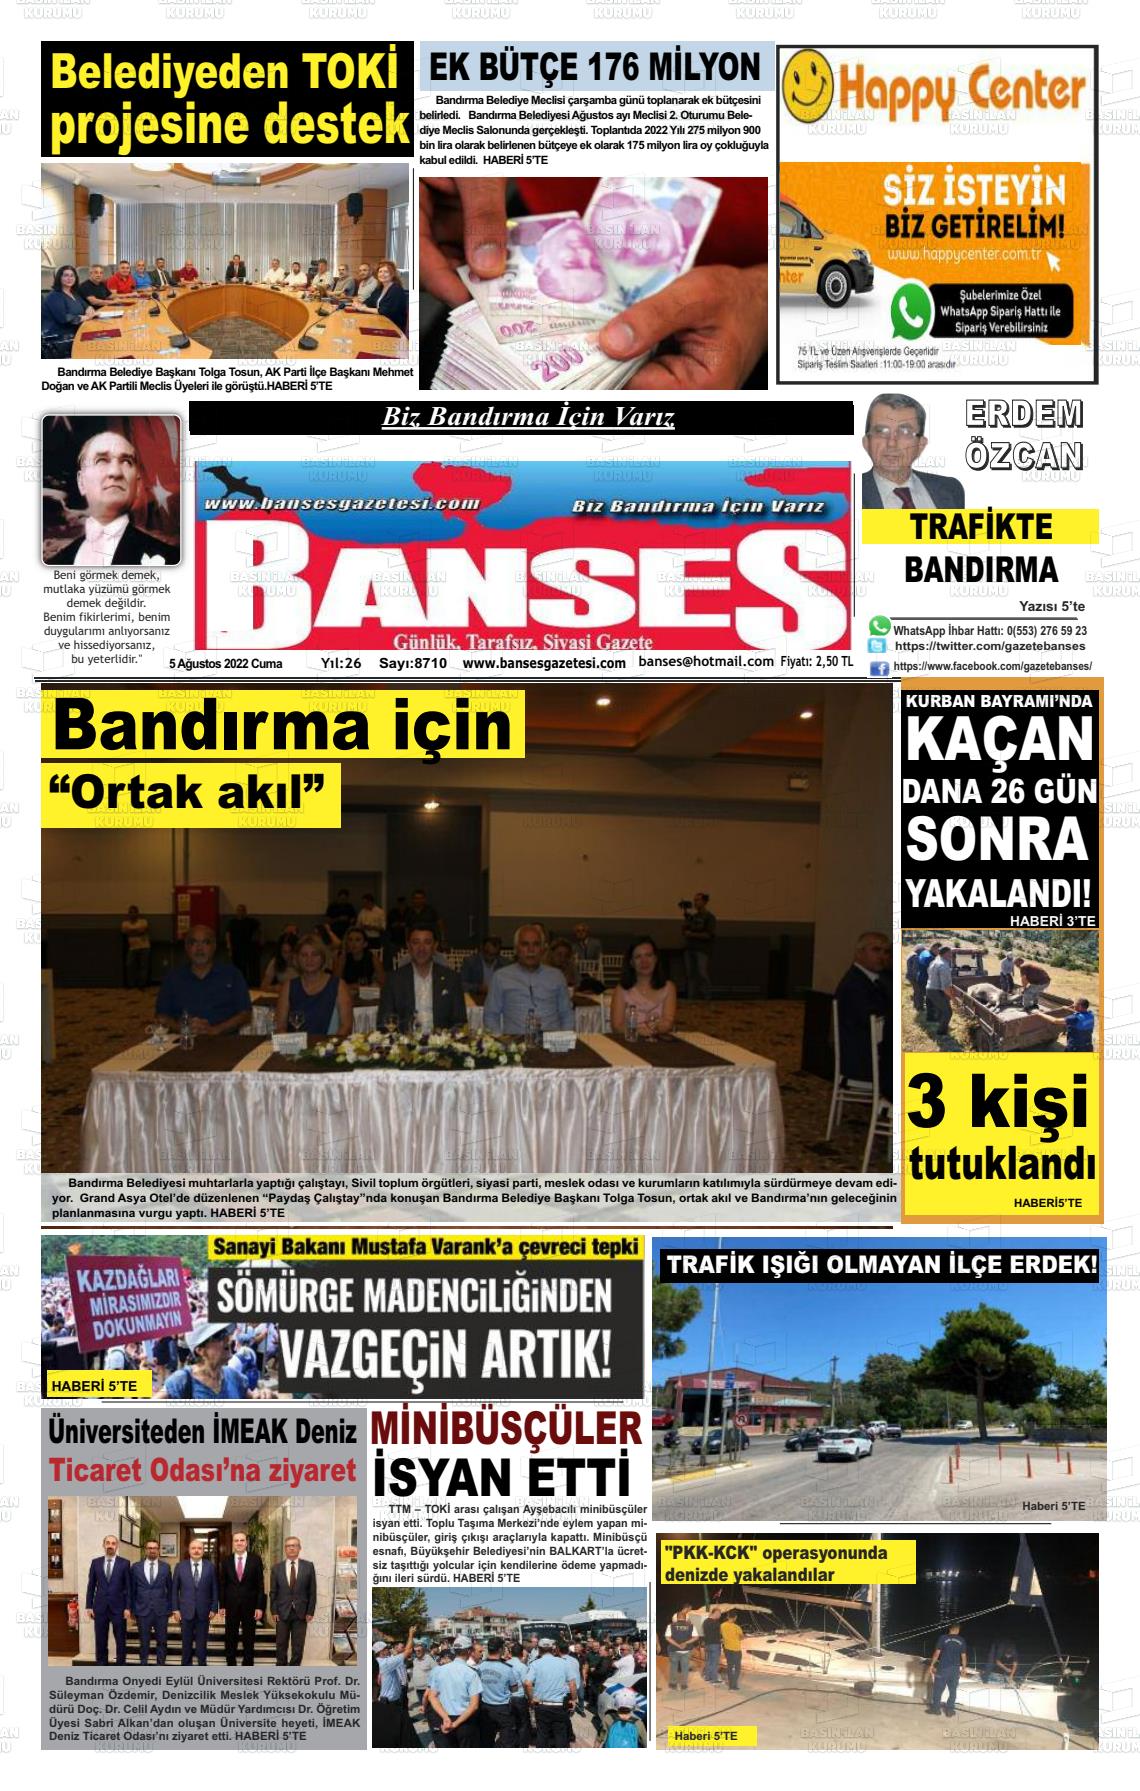 05 Ağustos 2022 Banses Gazete Manşeti